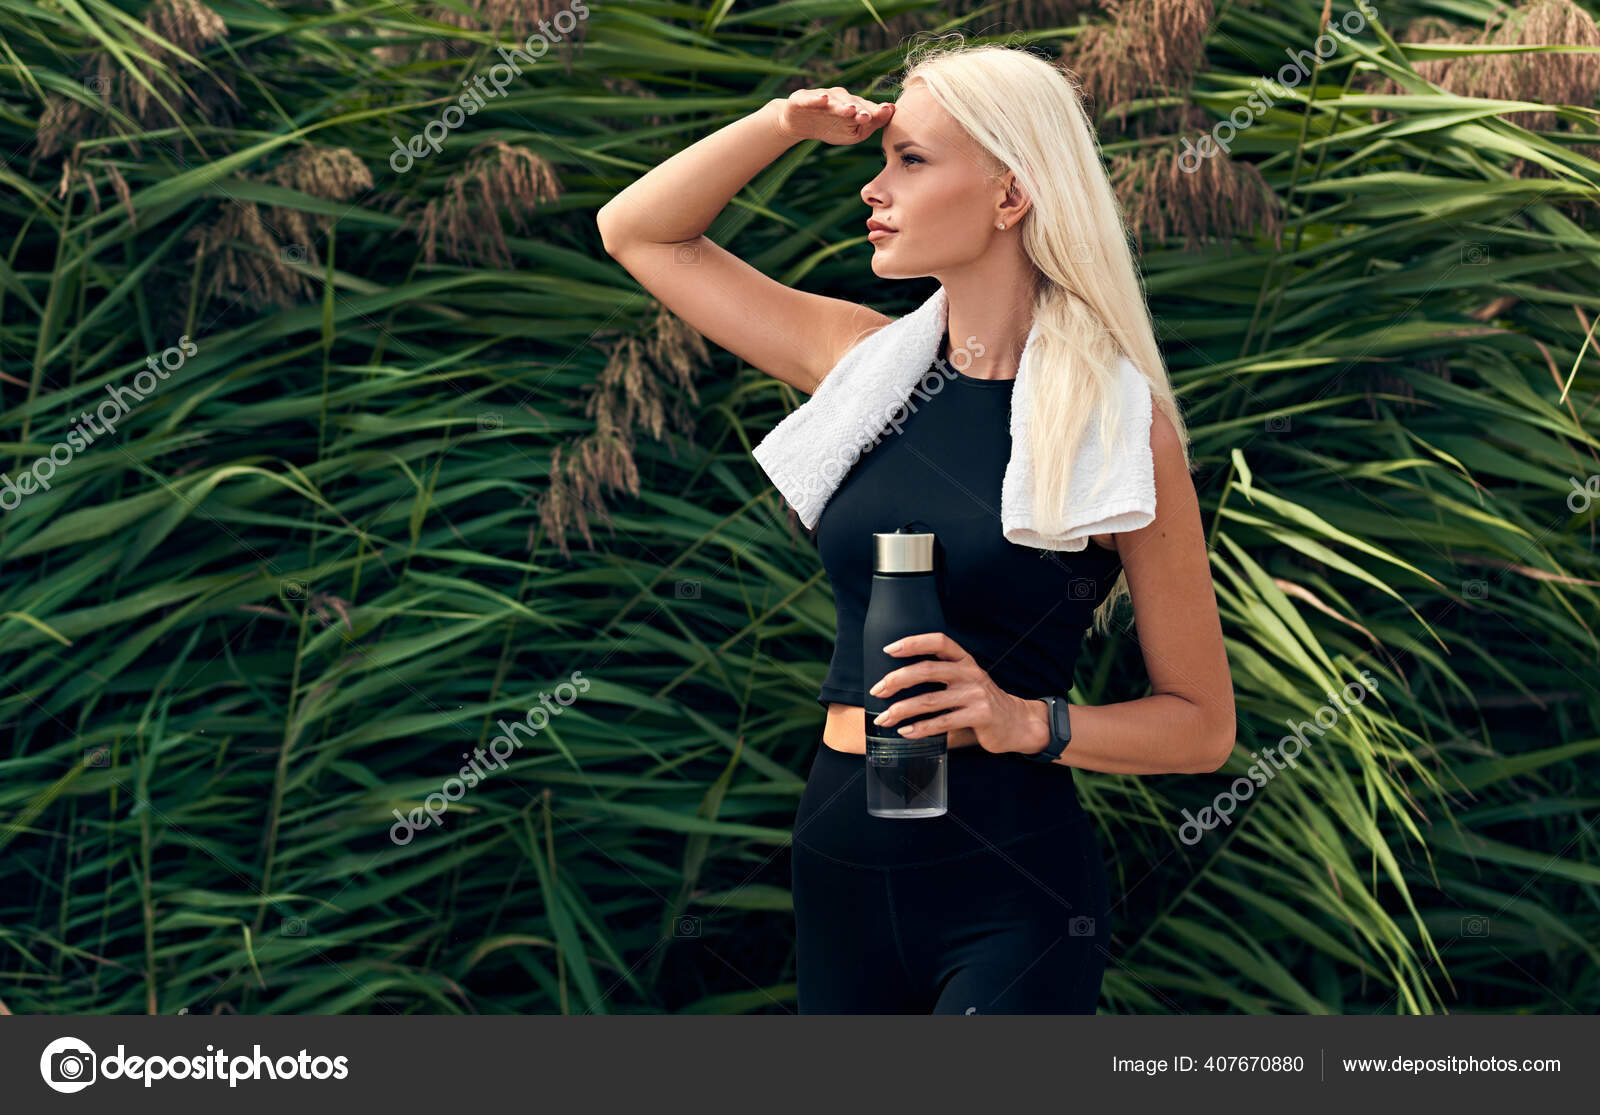 Shot of beautiful female runner standing outdoors holding water